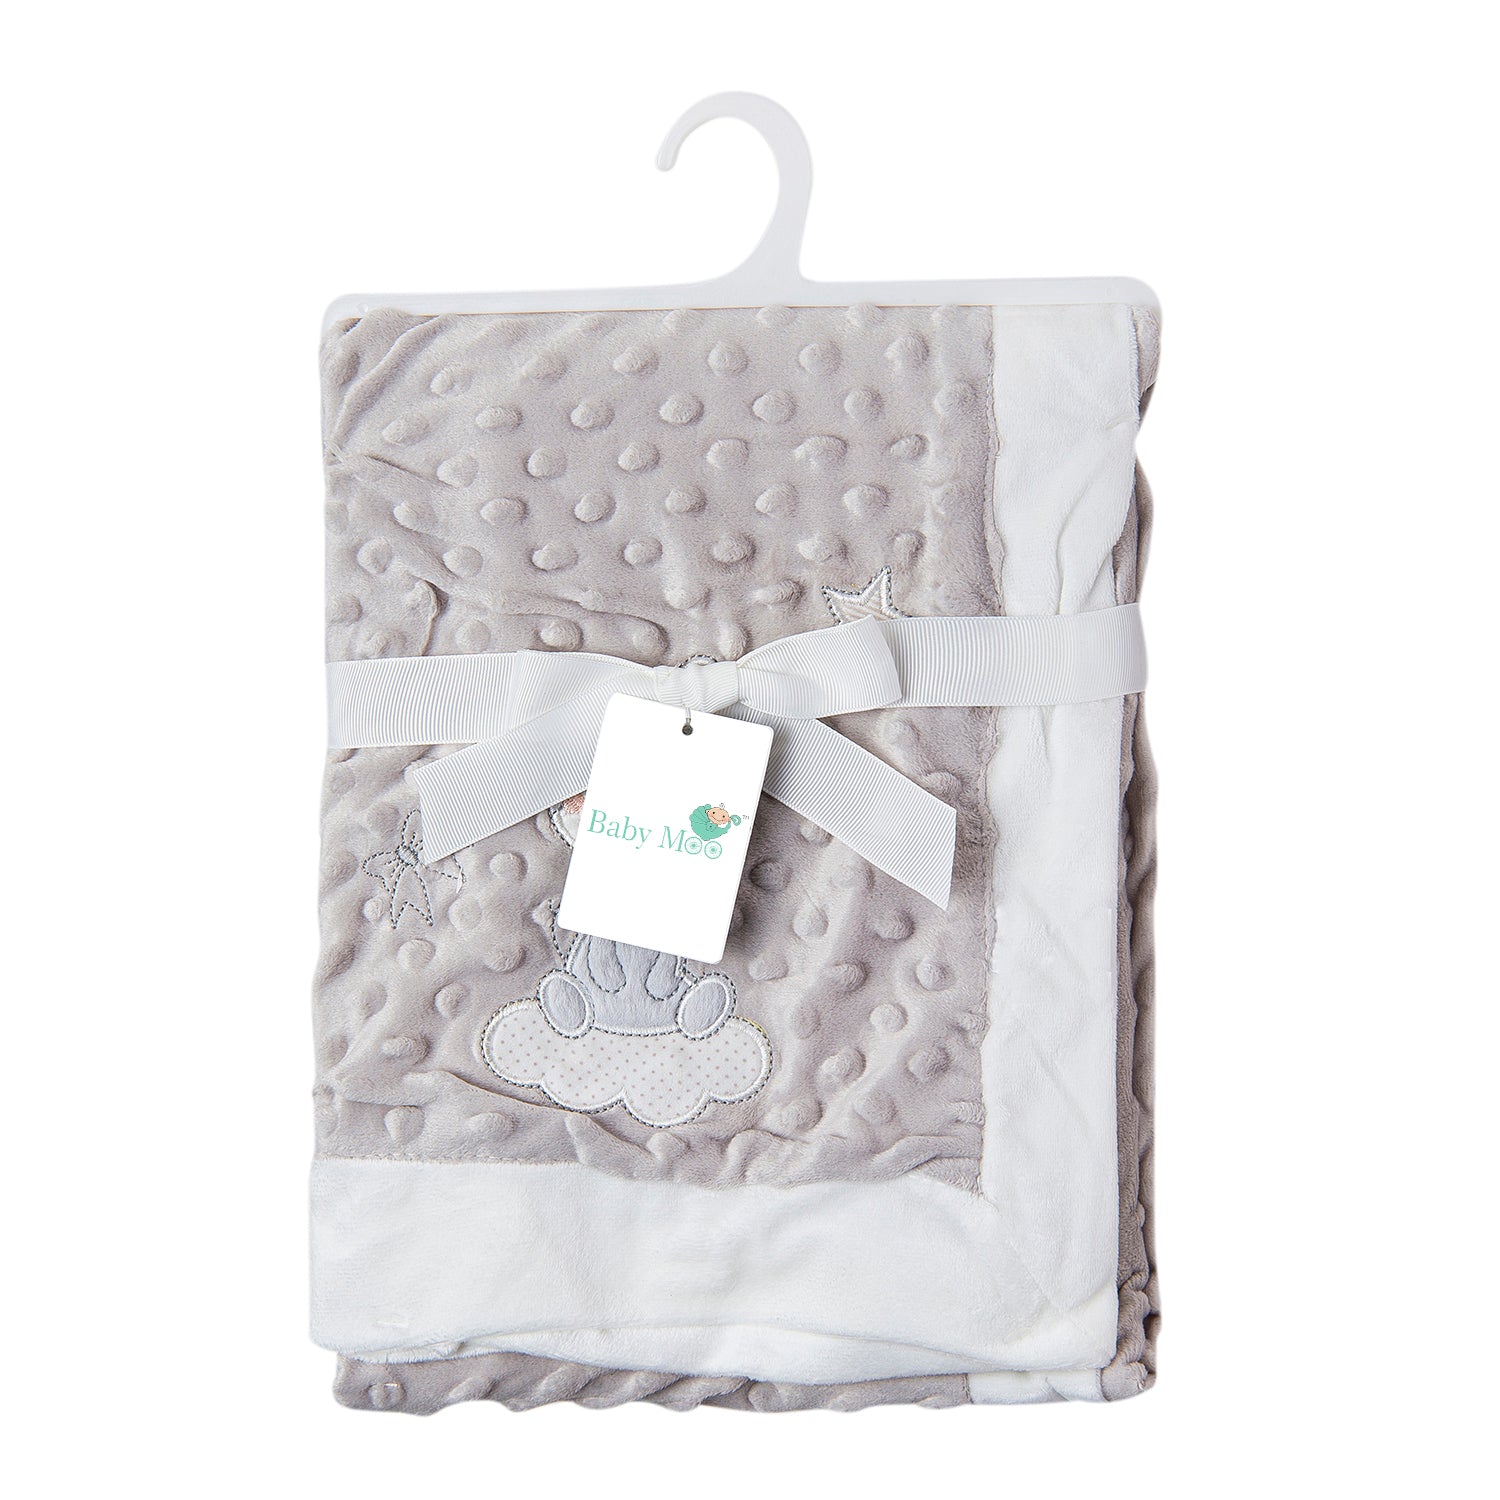 Baby Moo Animal Soft Reversible Bubble Blanket Grey